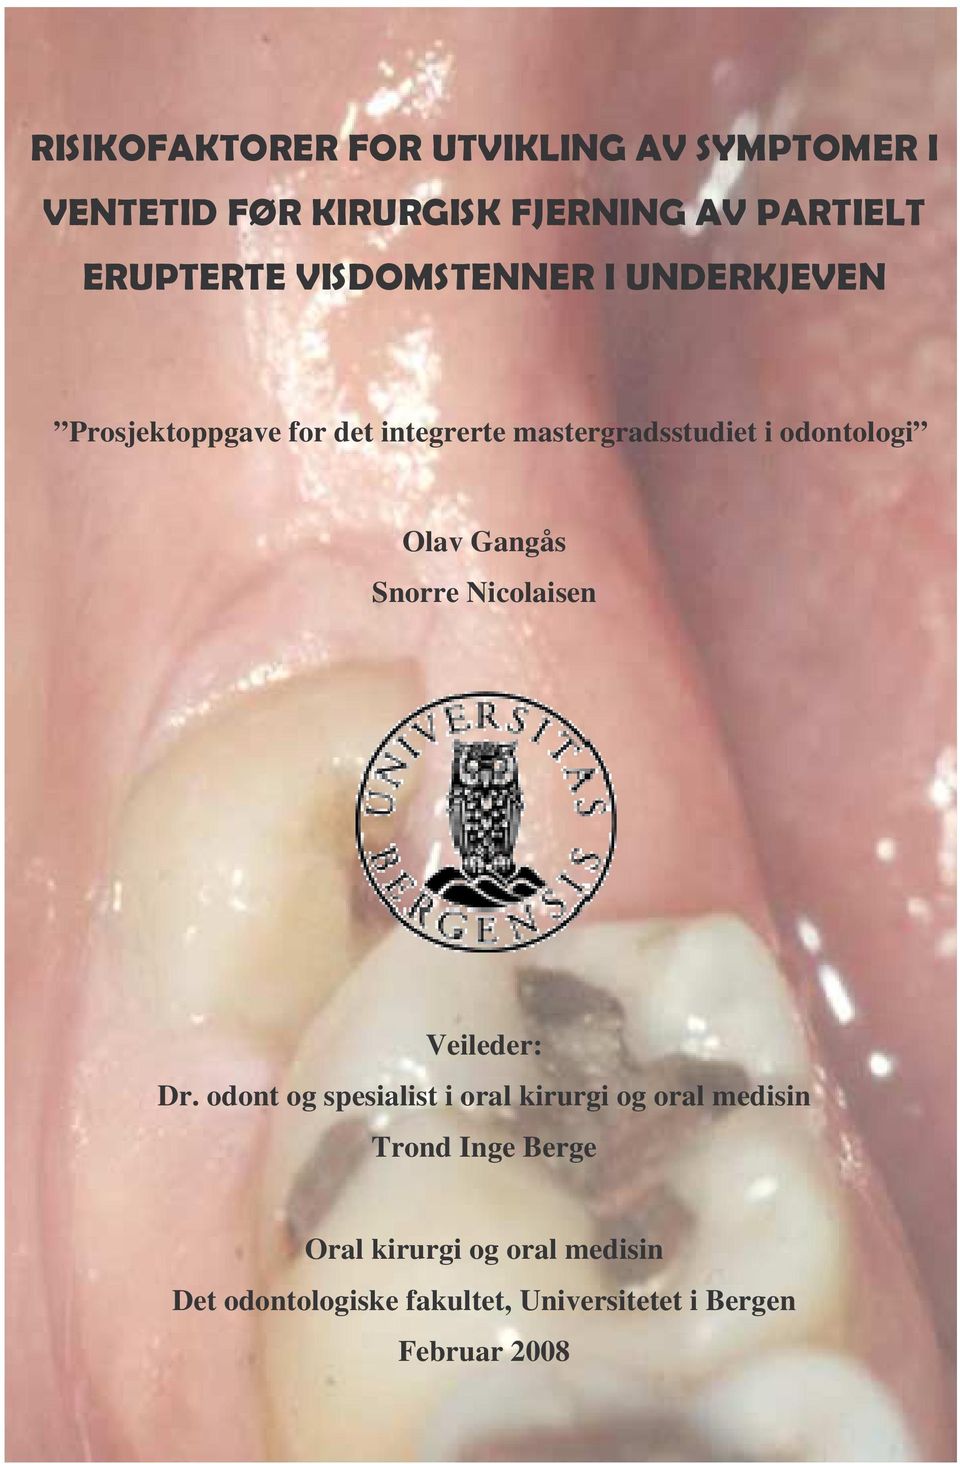 odont og spesialist i oral kirurgi og oral medisin Trond Inge Berge